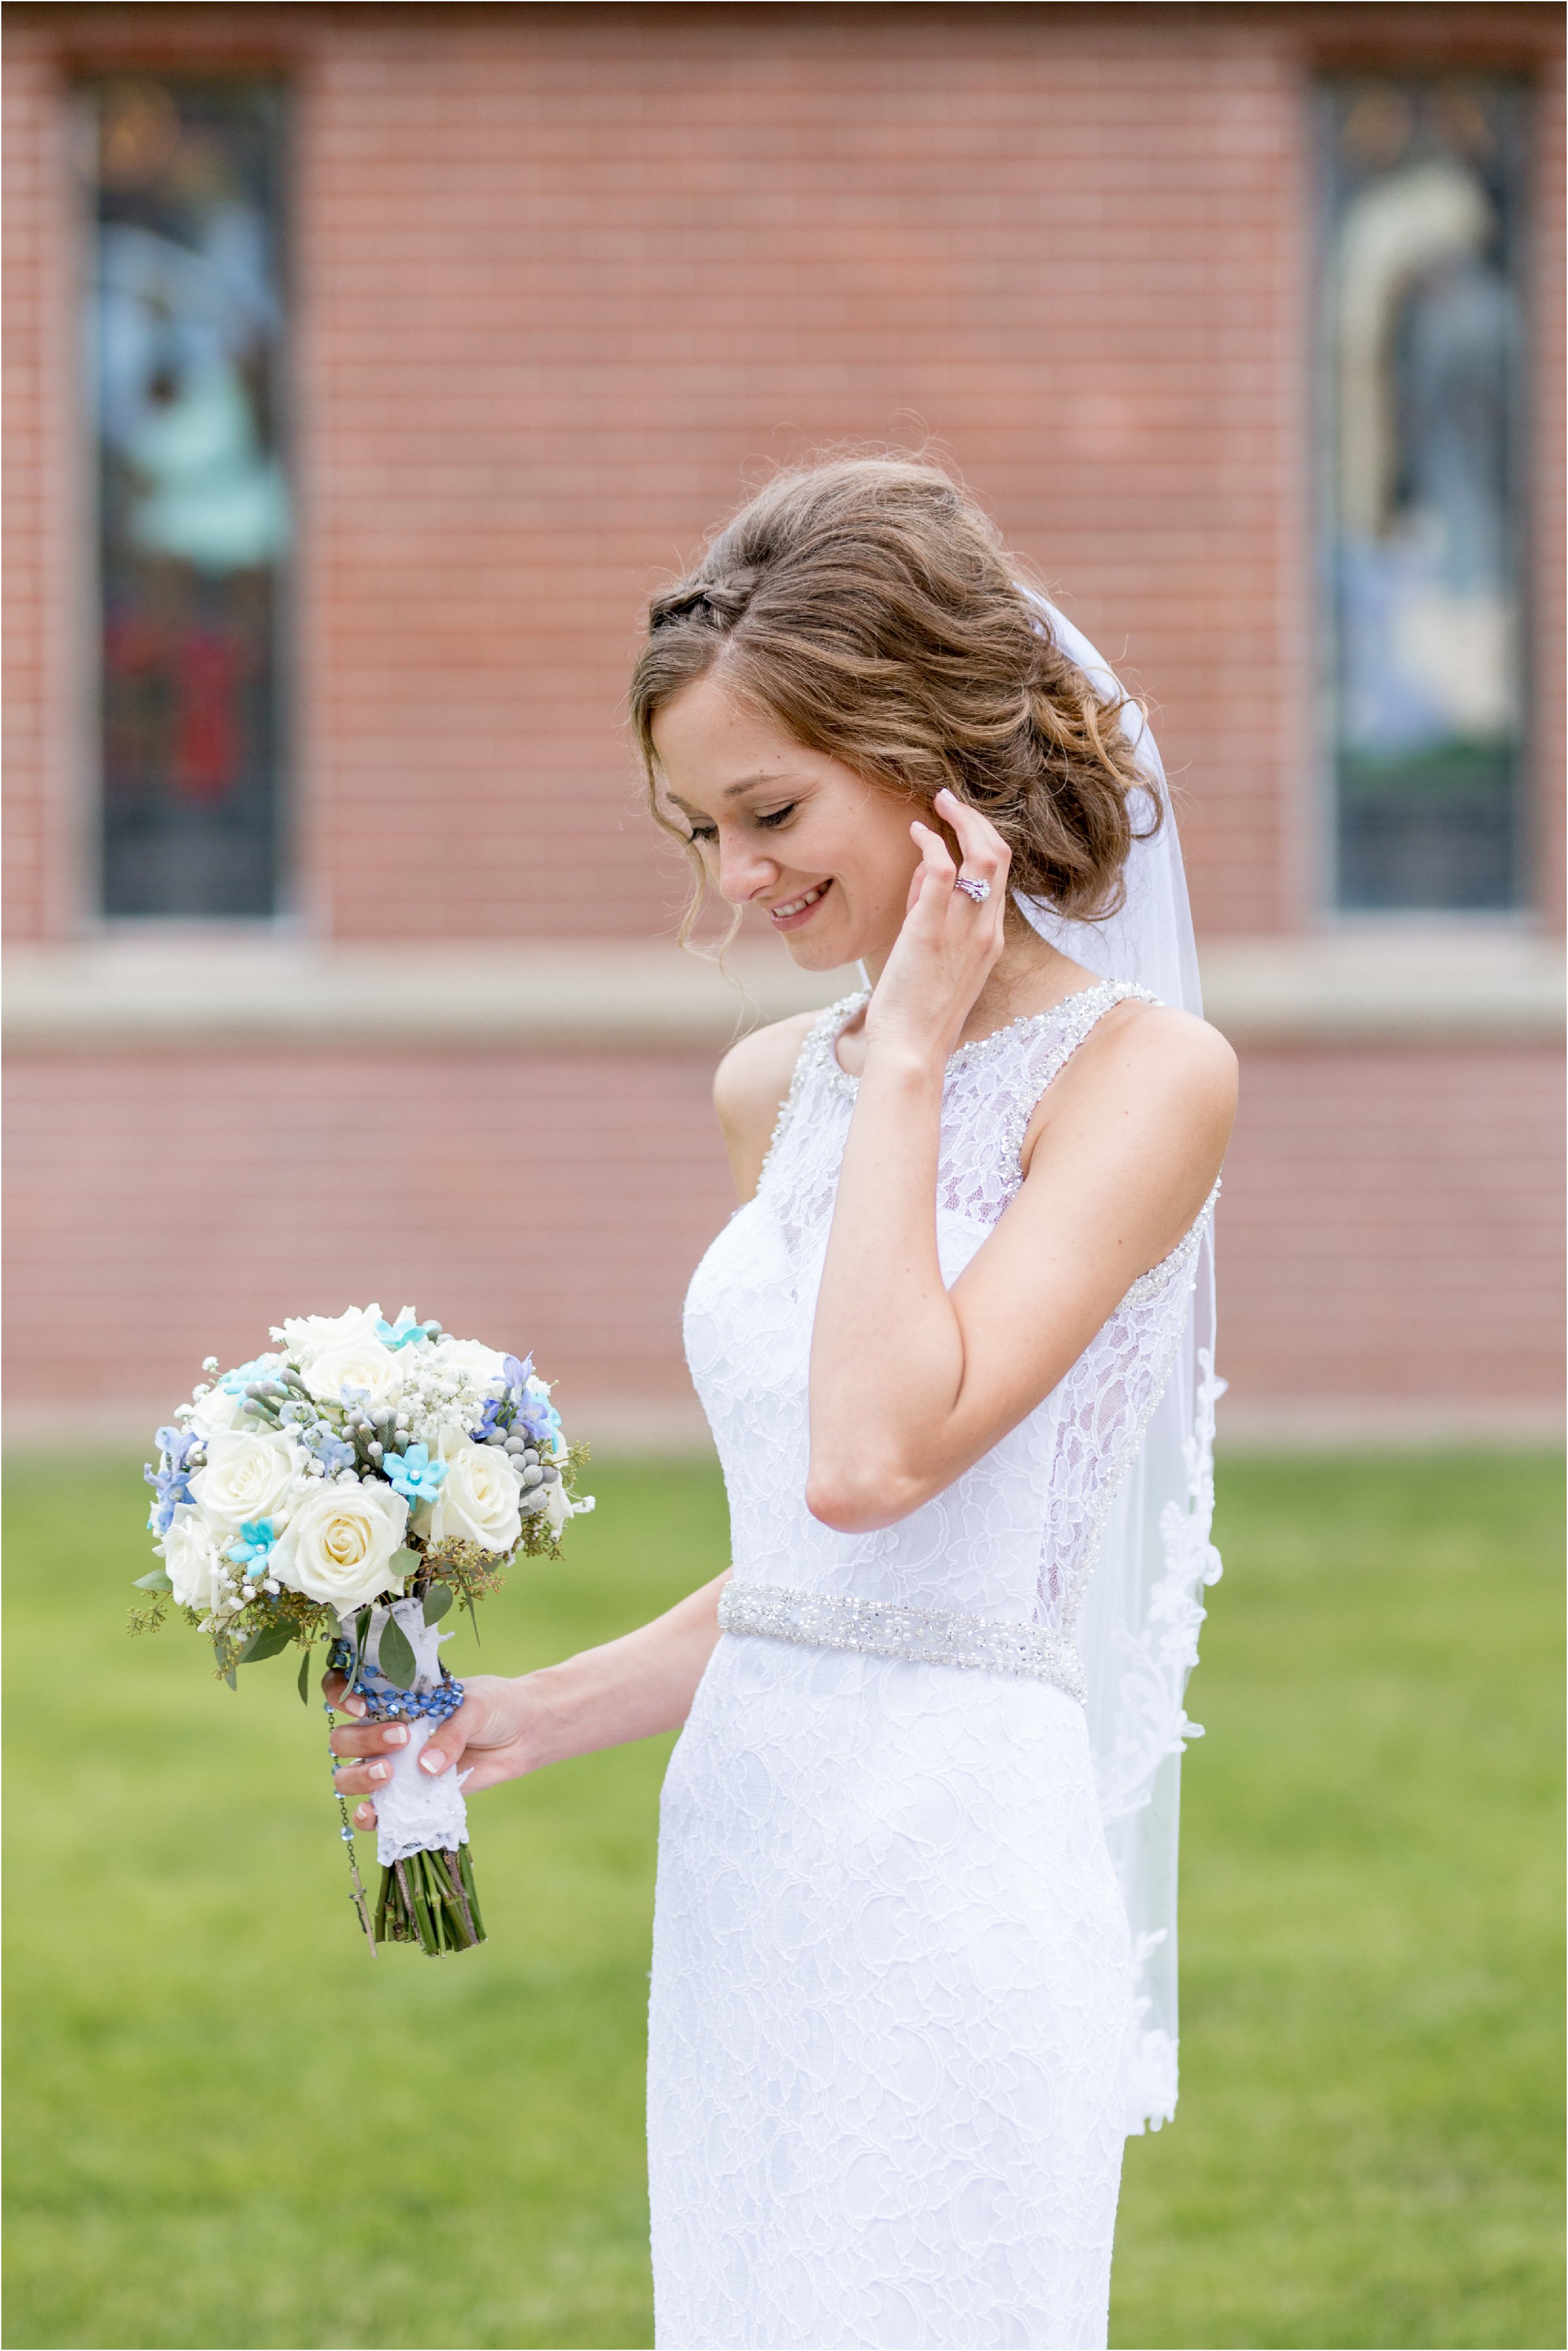 Holdrege, Nebraska Wedding by Greeley, Colorado Wedding Photographer